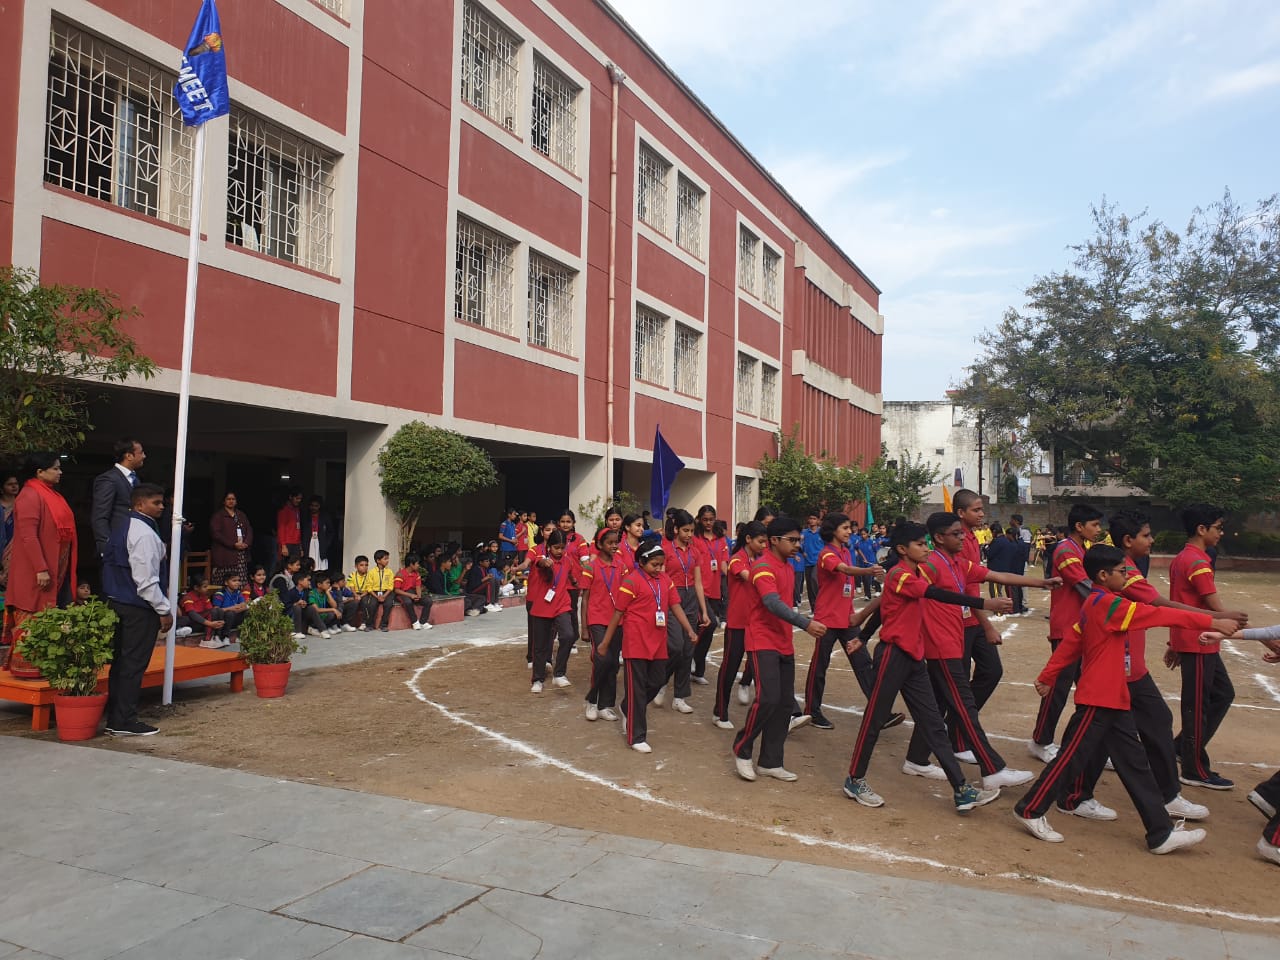 Sports Day Celebration - Ryan International School, Bhopal